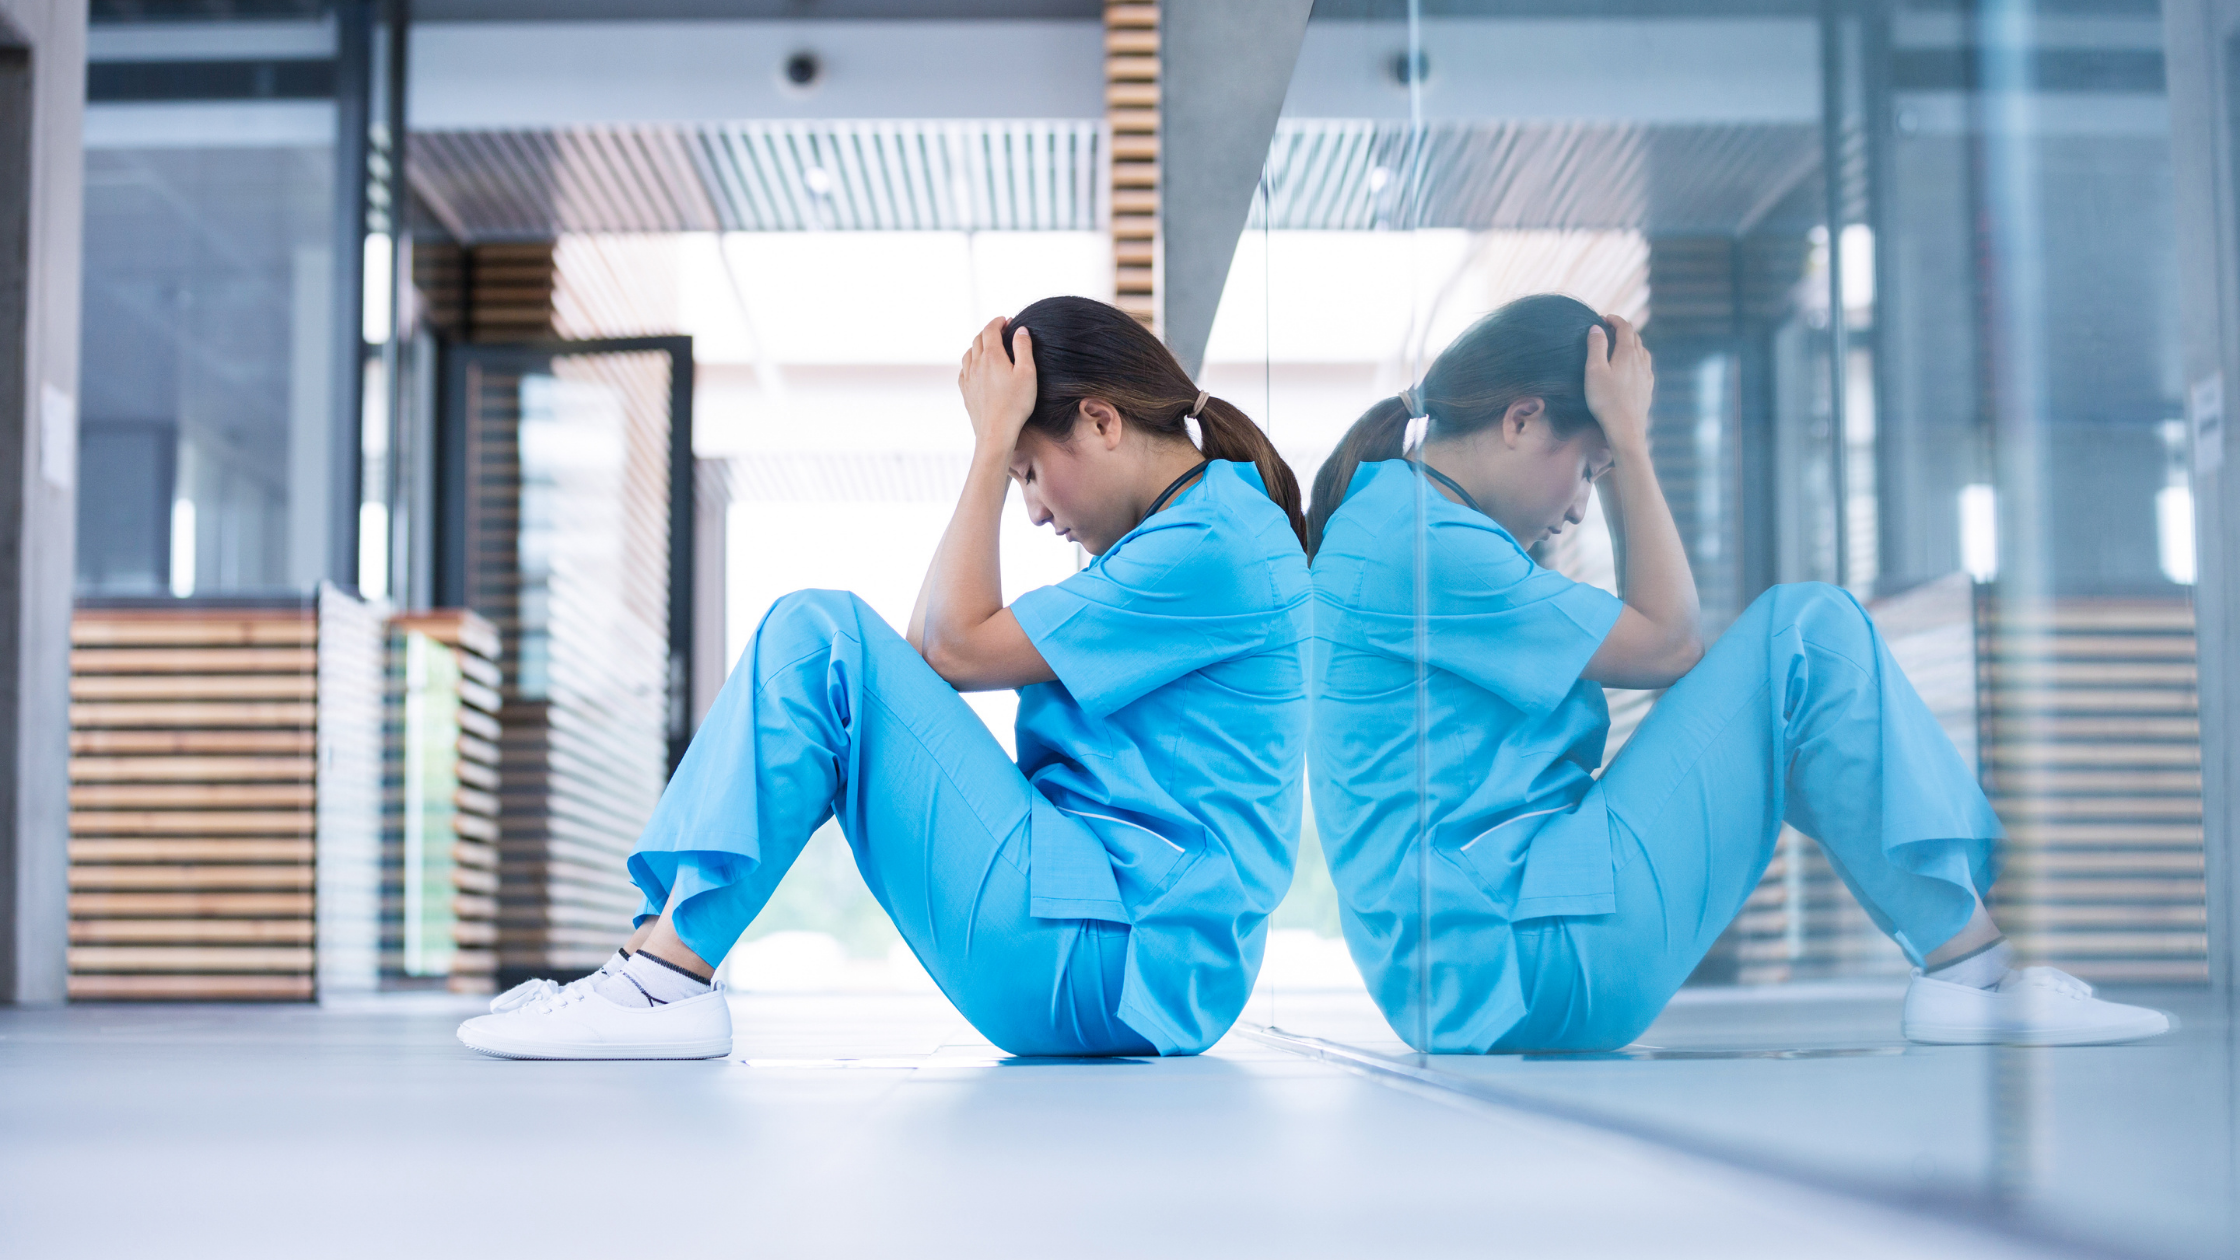 4 Ways to Improve Nurse Retention During COVID-19